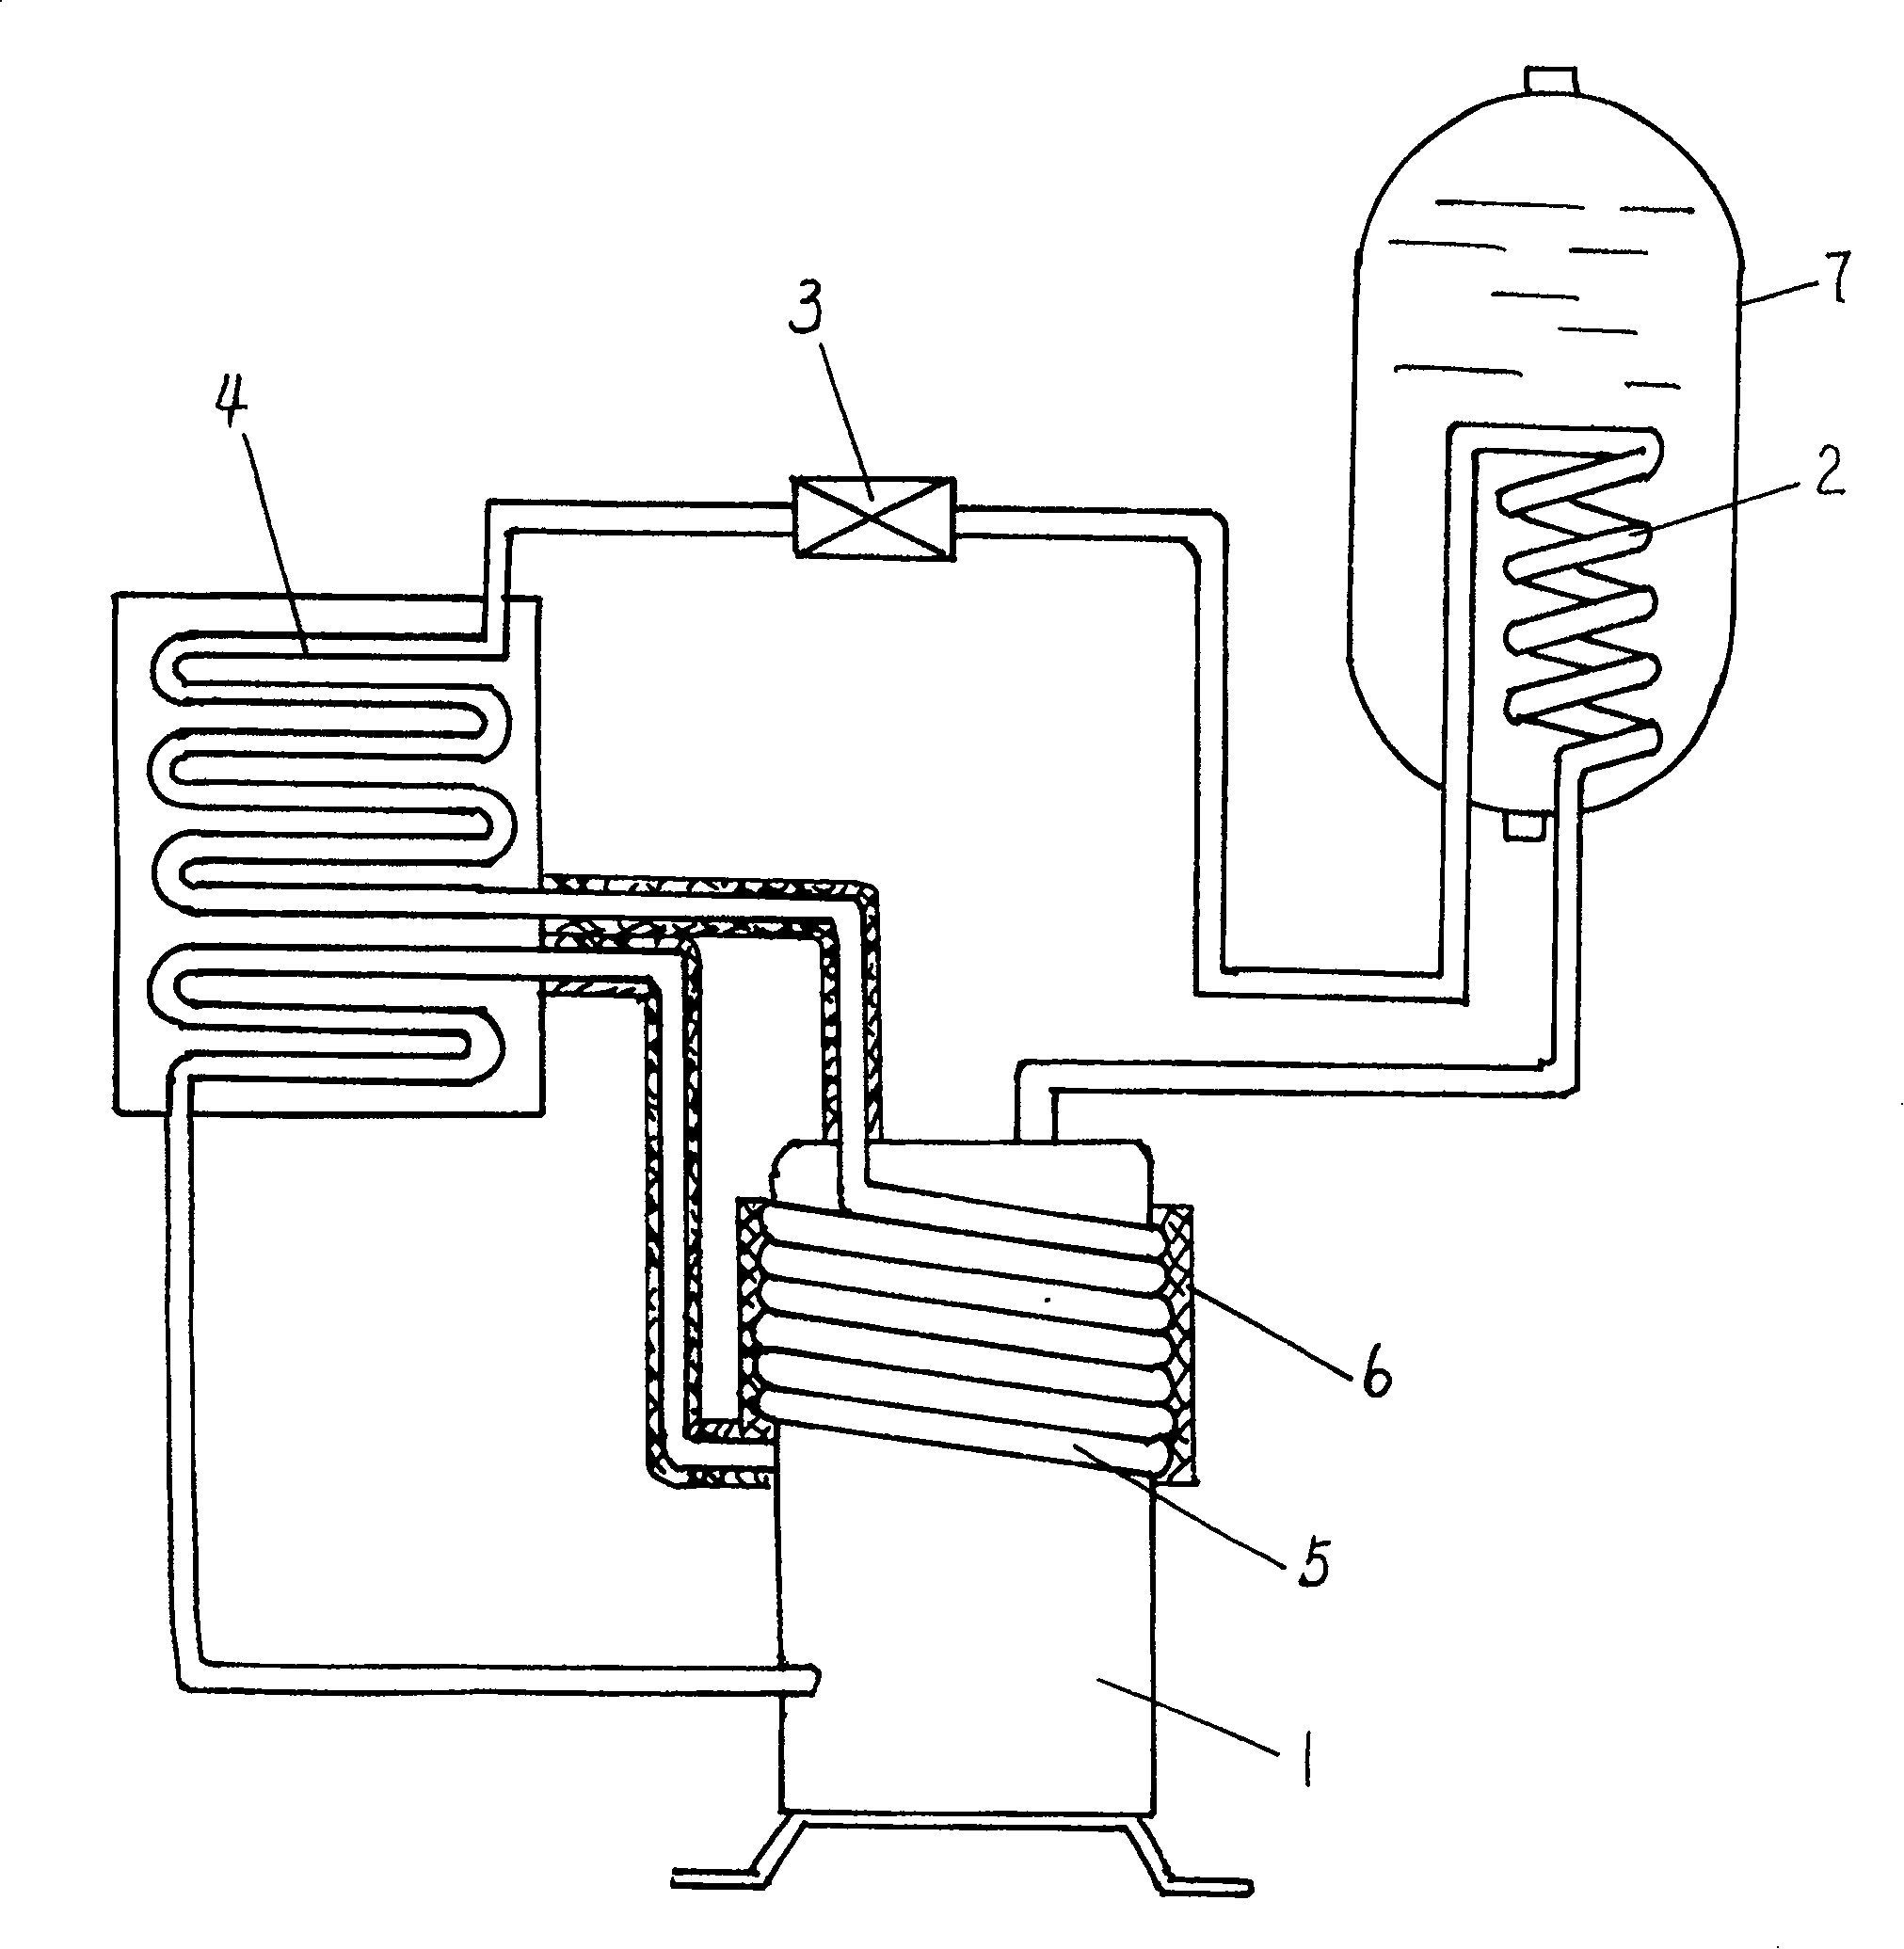 Heat pump system of heat pump water heater